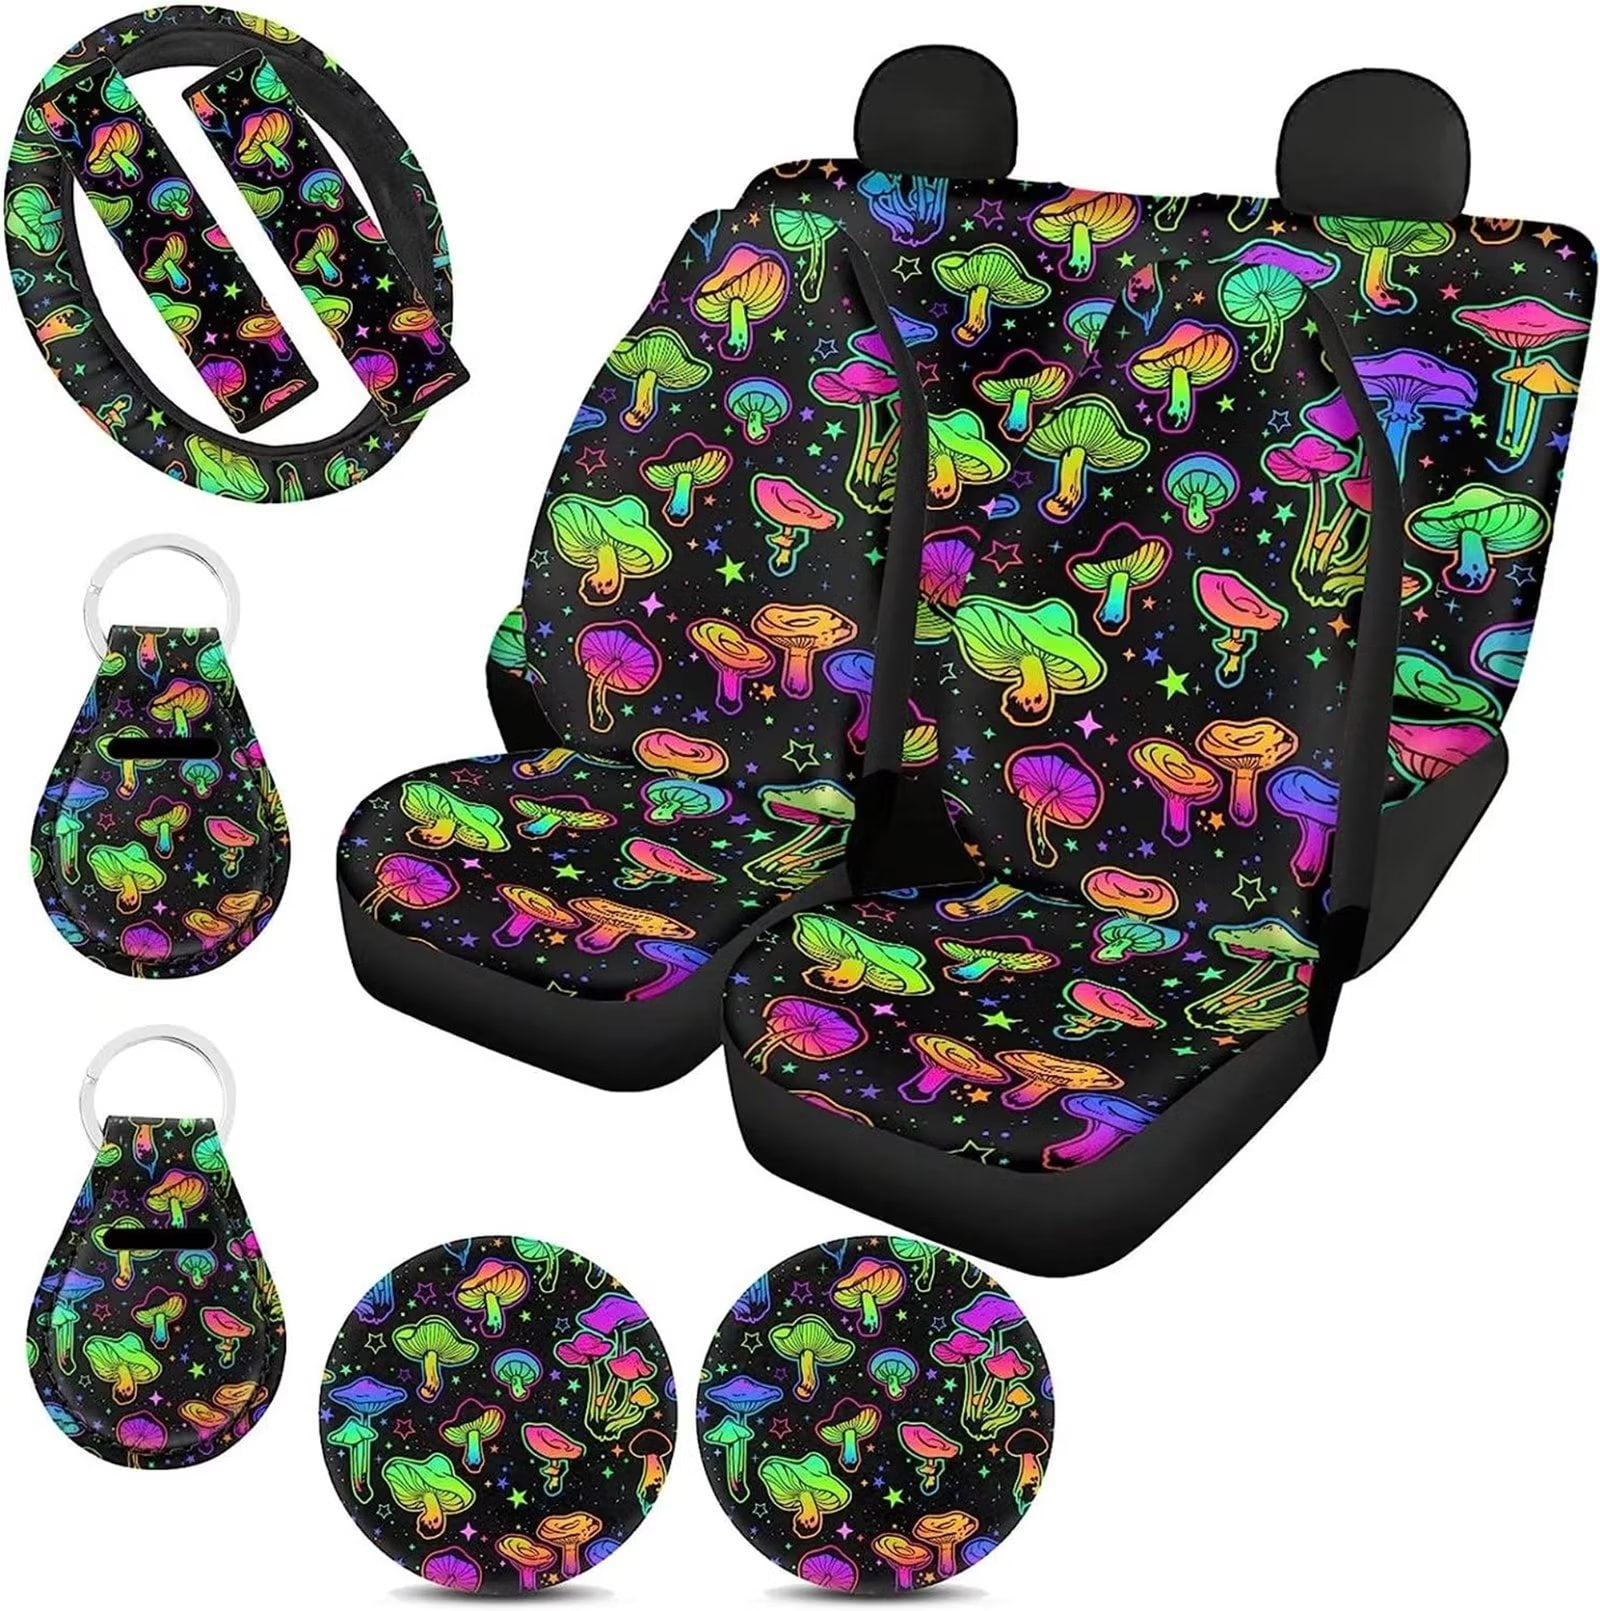 Pzuqiu Purple Butterfly Car Accessories Car Seat Covers Full Set for